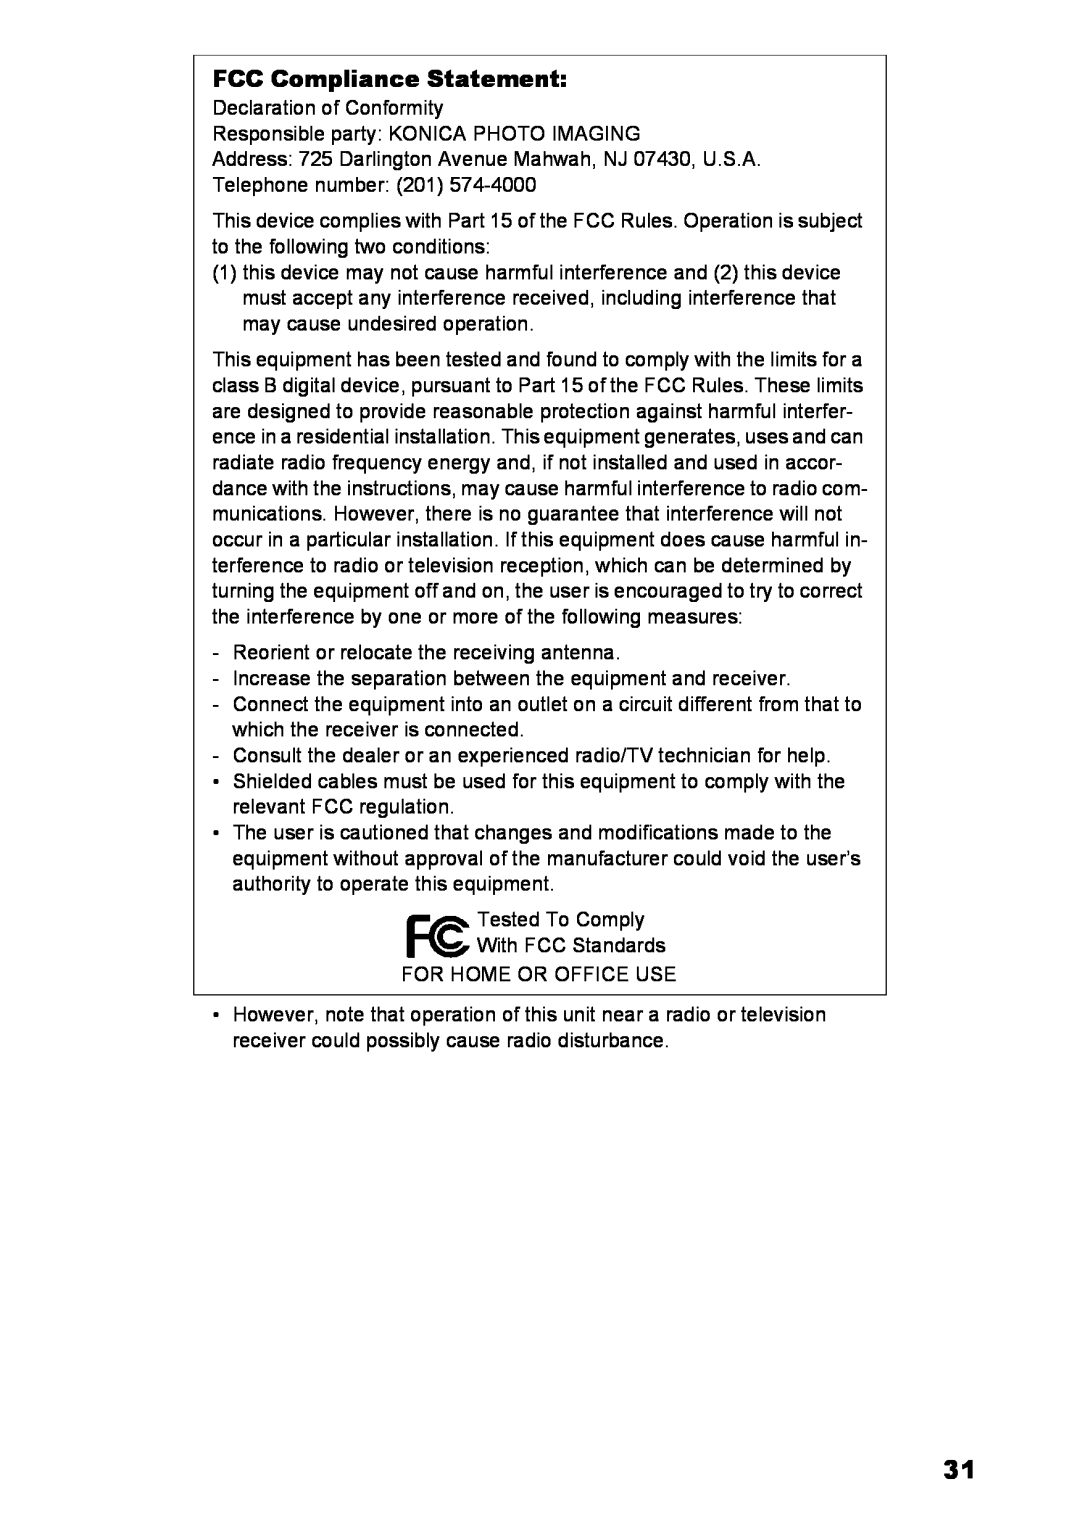 Konica Minolta C2 warranty FCC Compliance Statement 